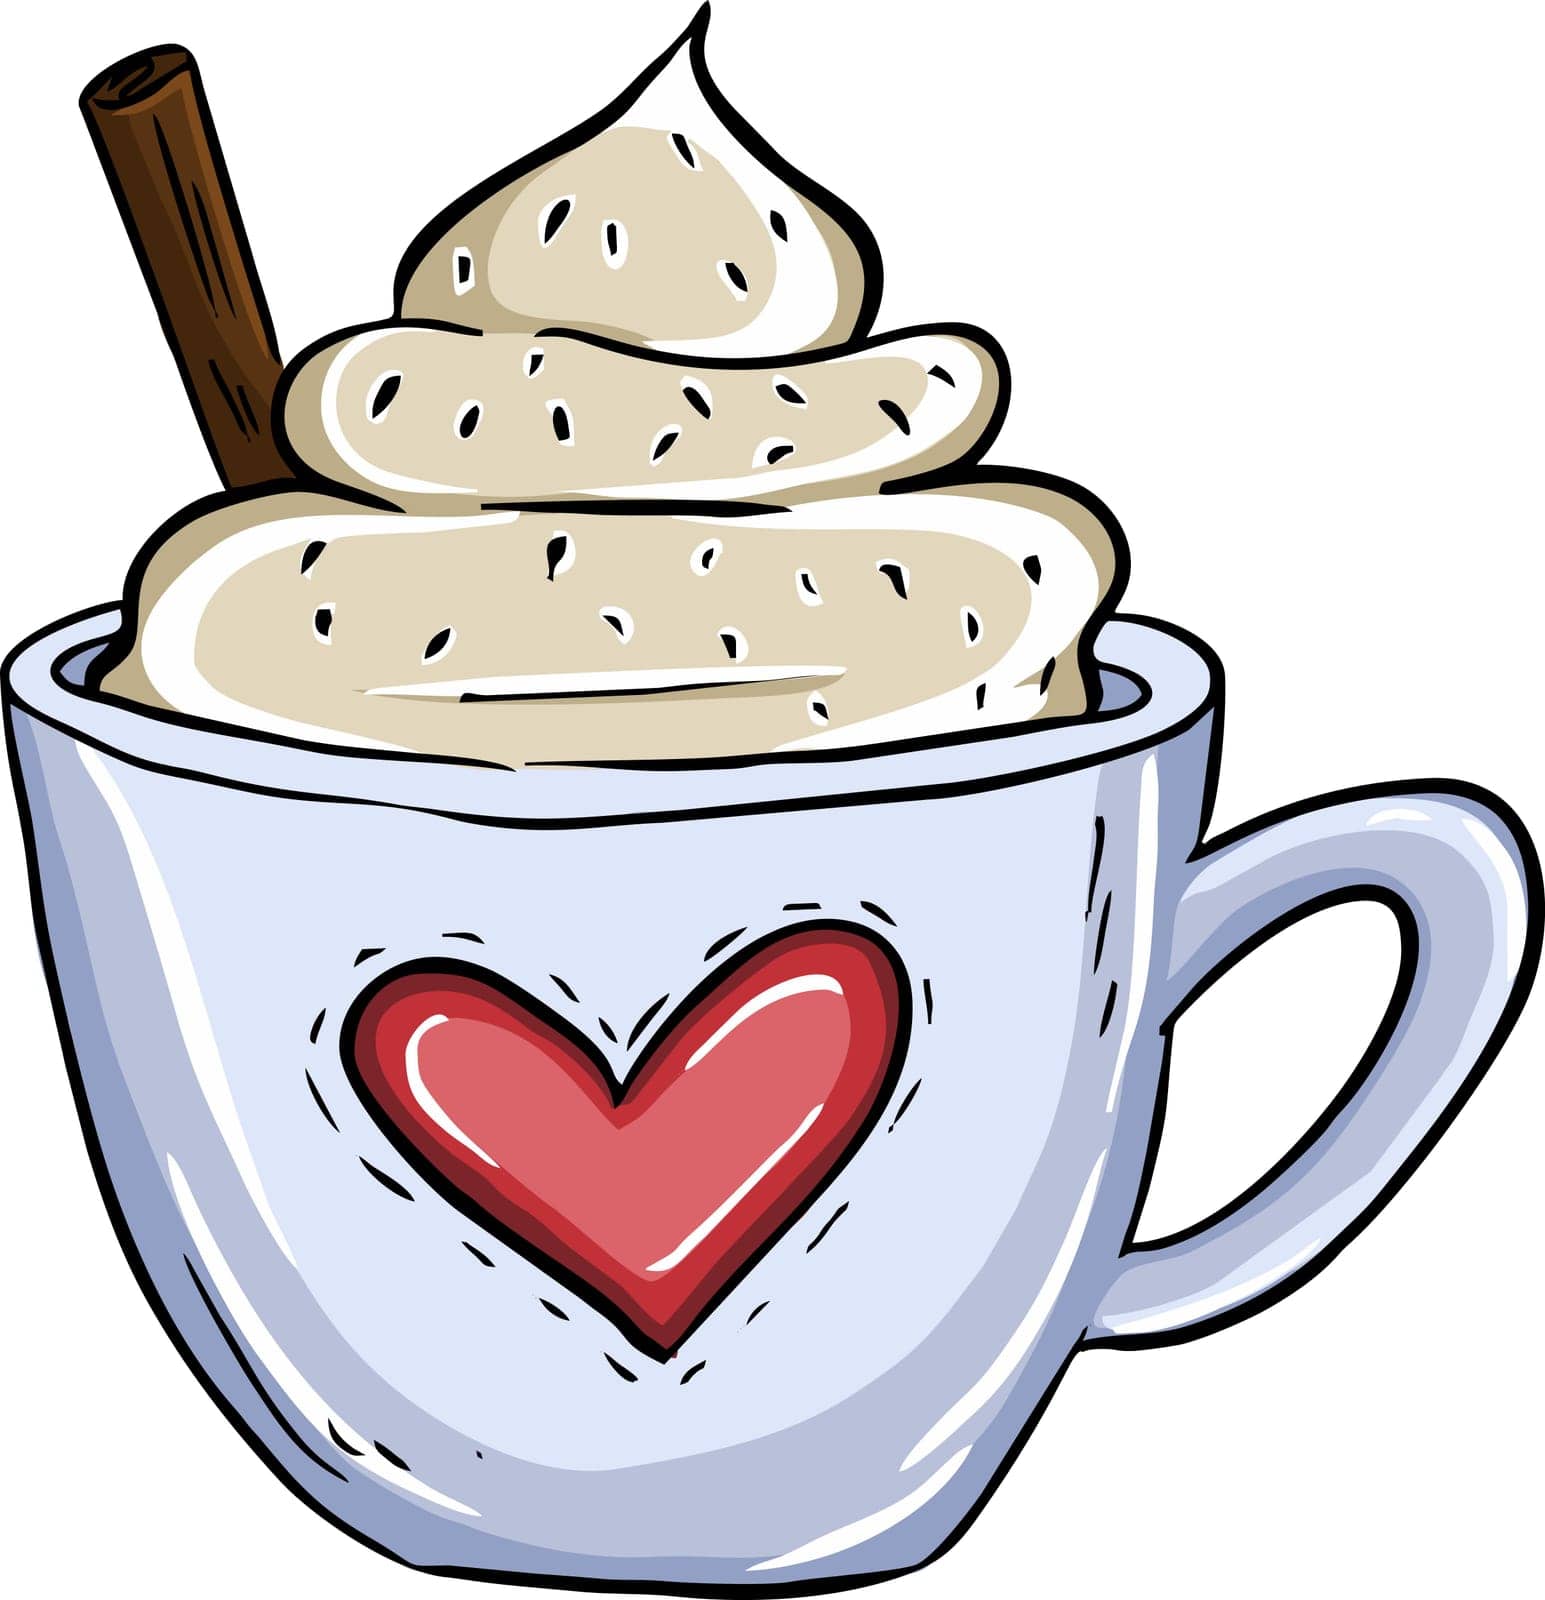 Illustration coffee cup with cream and cinnamon by Katarina_Zavyalova